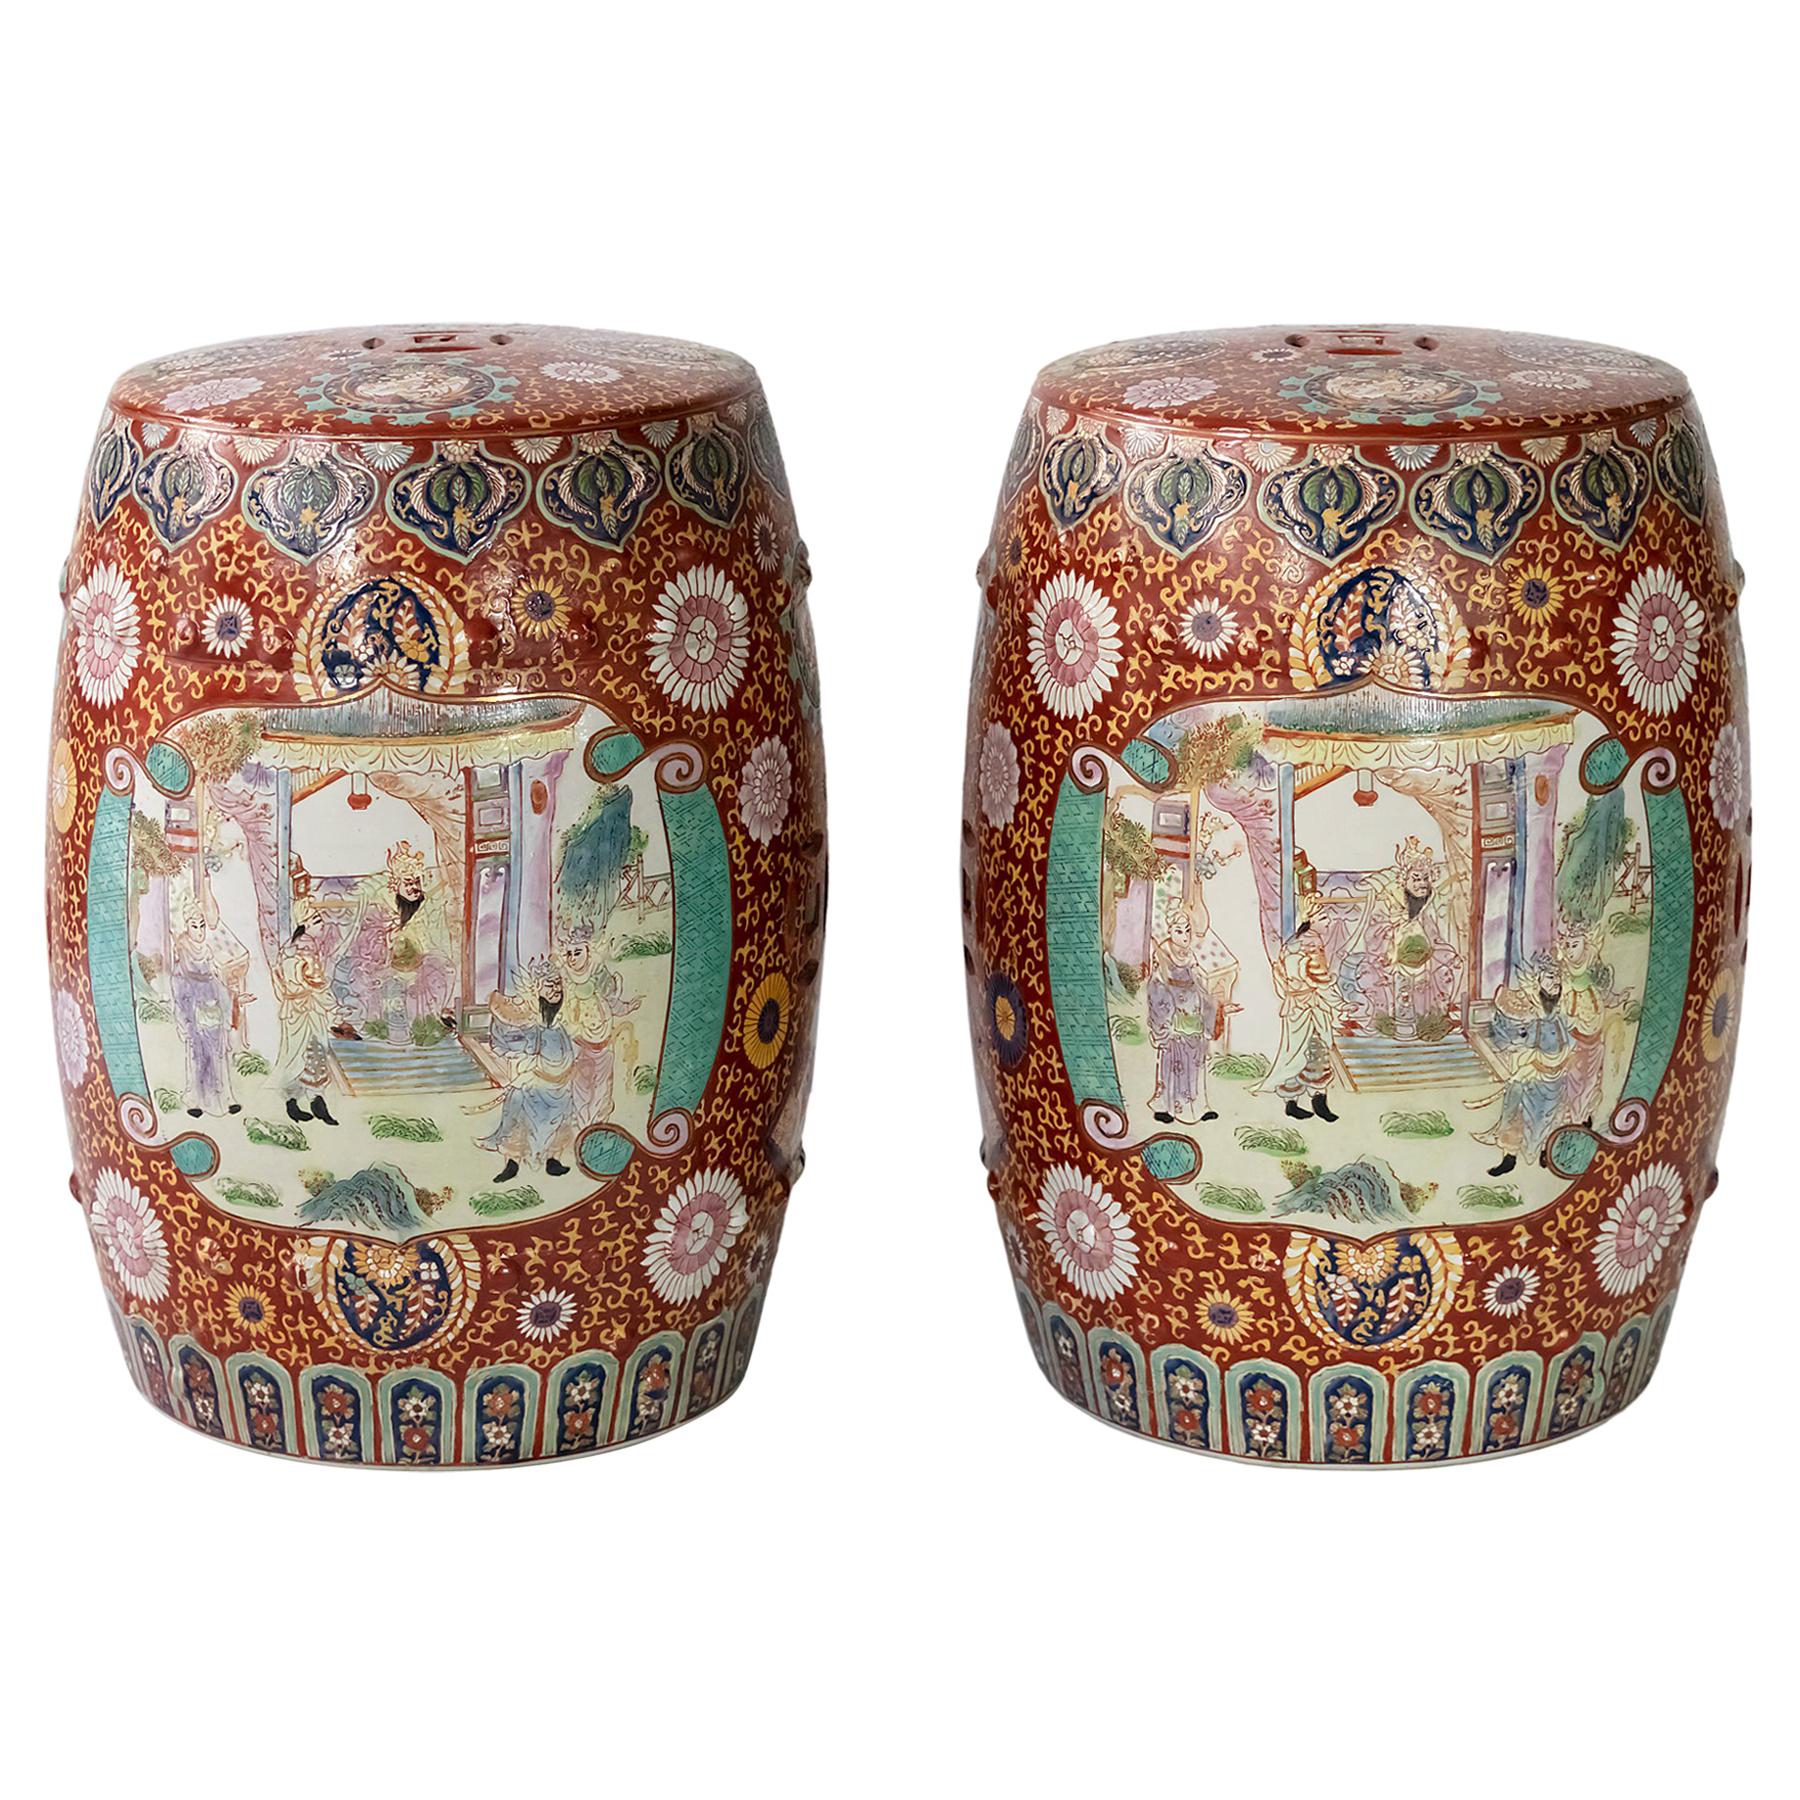 Pair of Ceramic Hand Painted Chinese Garden Stools